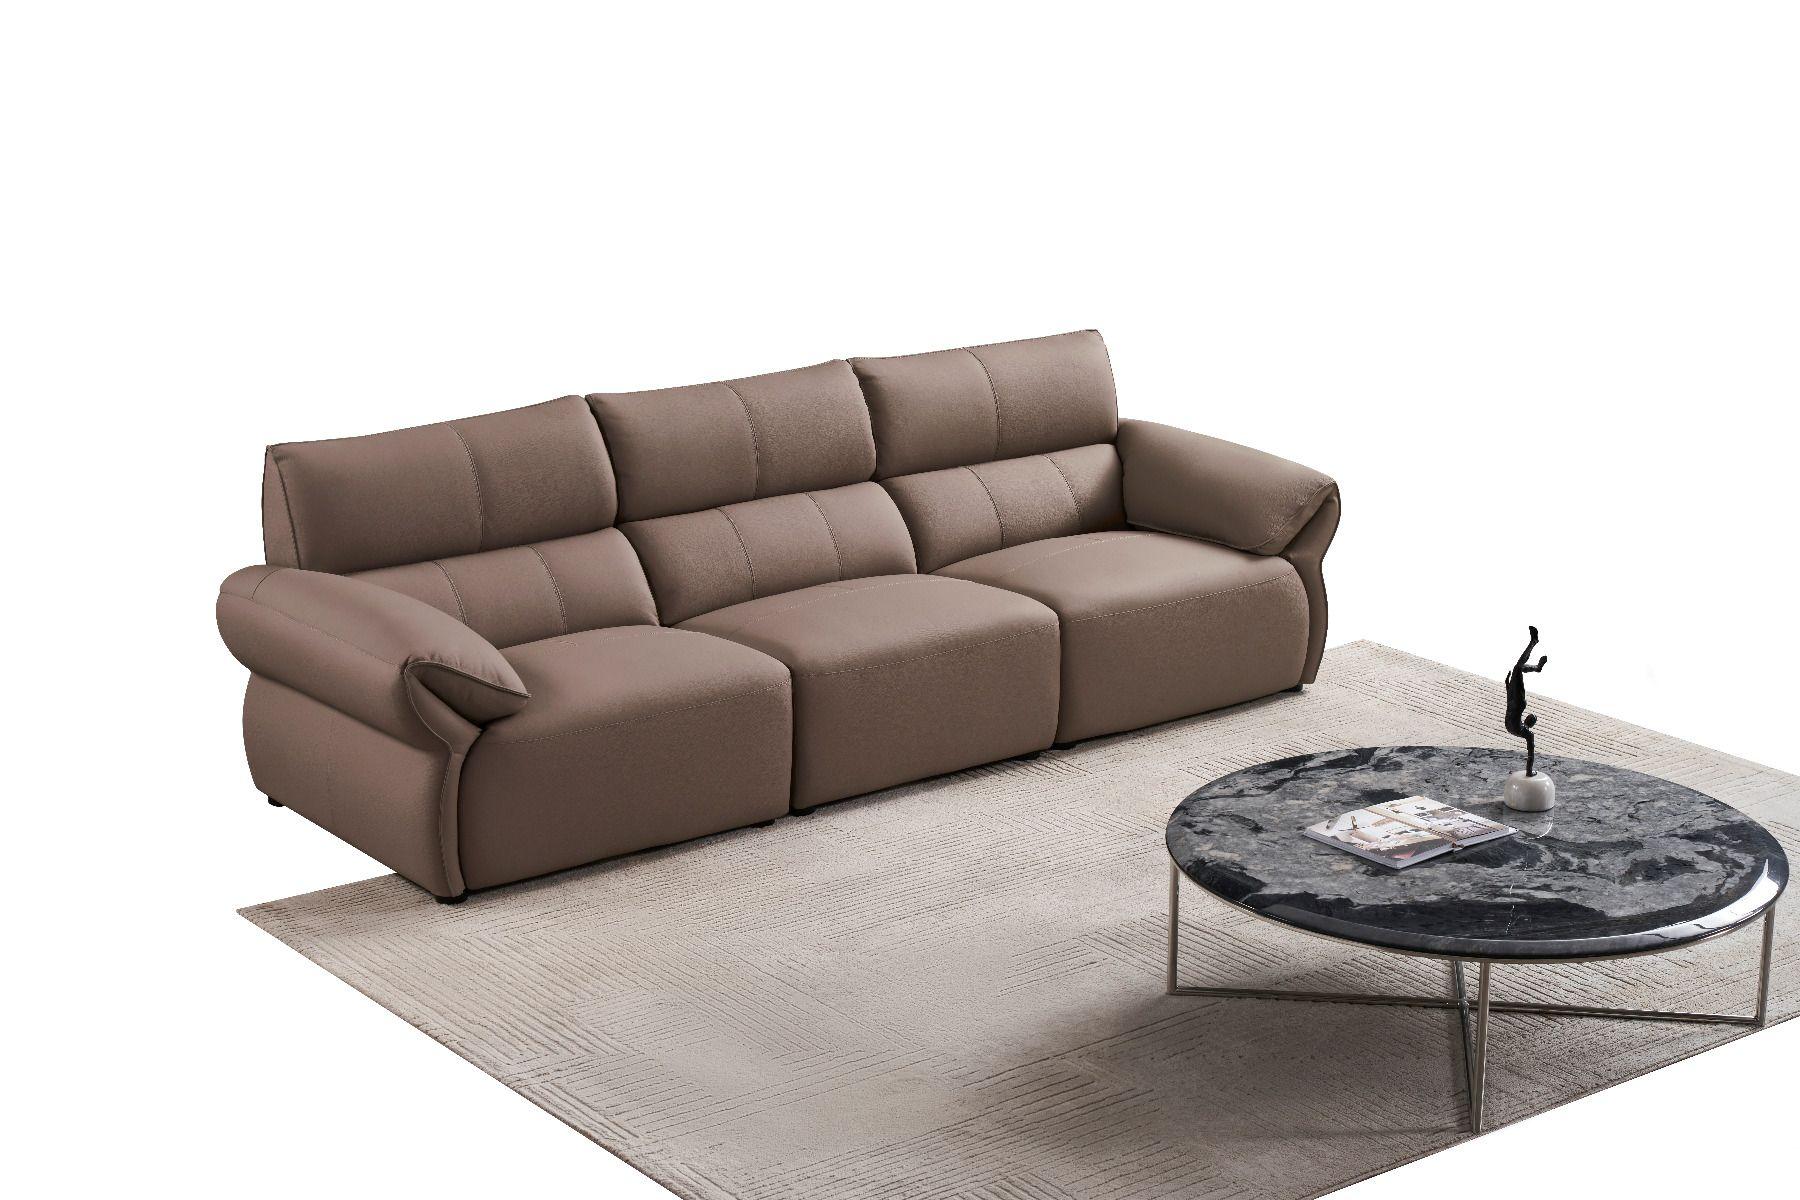 Contemporary Extra Long Sofa EK-D833-DT-4S EK-D833-DT-4S in Dark Tan Leather